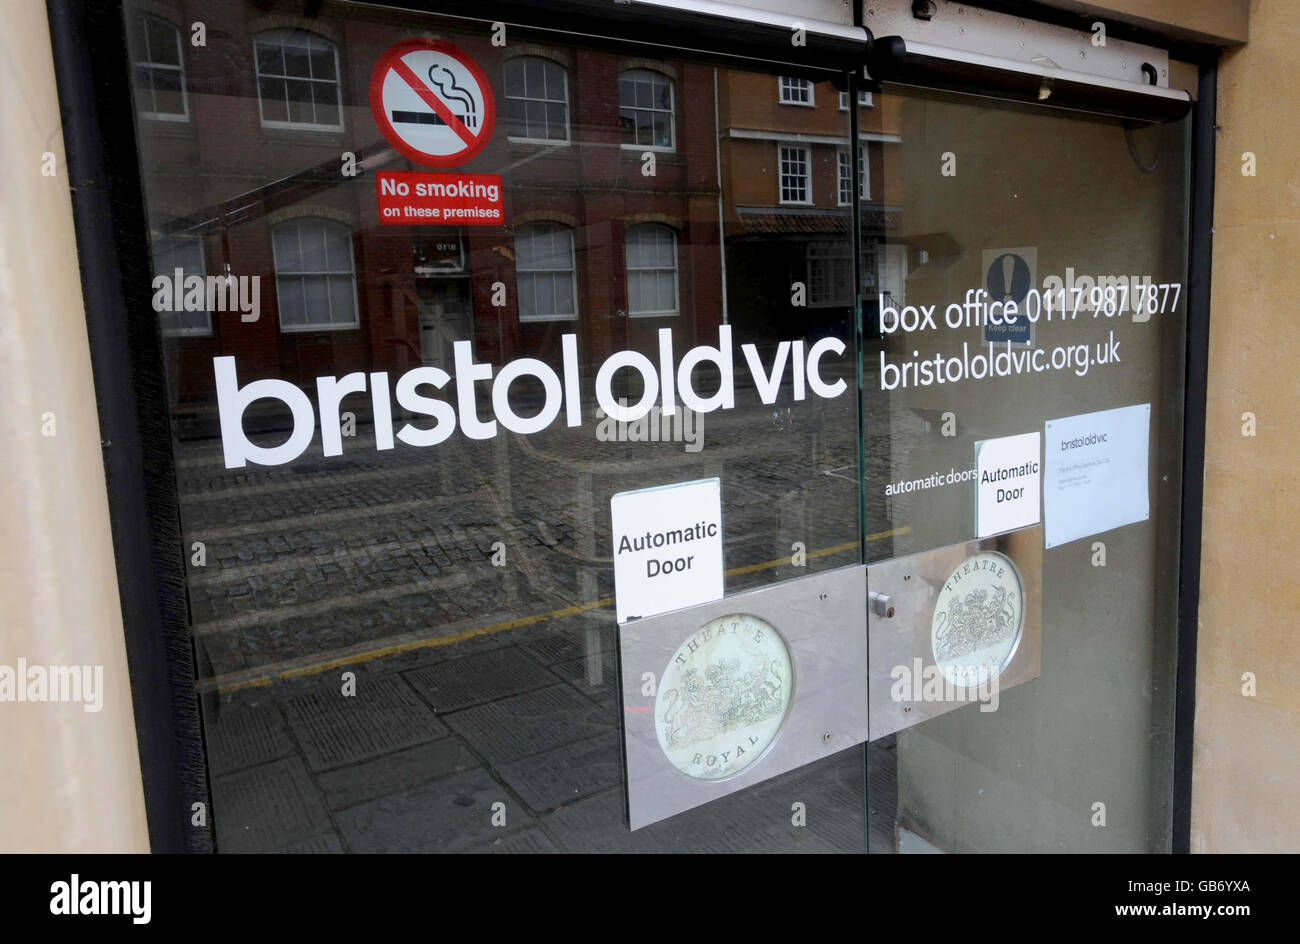 Bristol Doors Open Day: Old Vic, en.wikipedia.org/wiki/Bris…